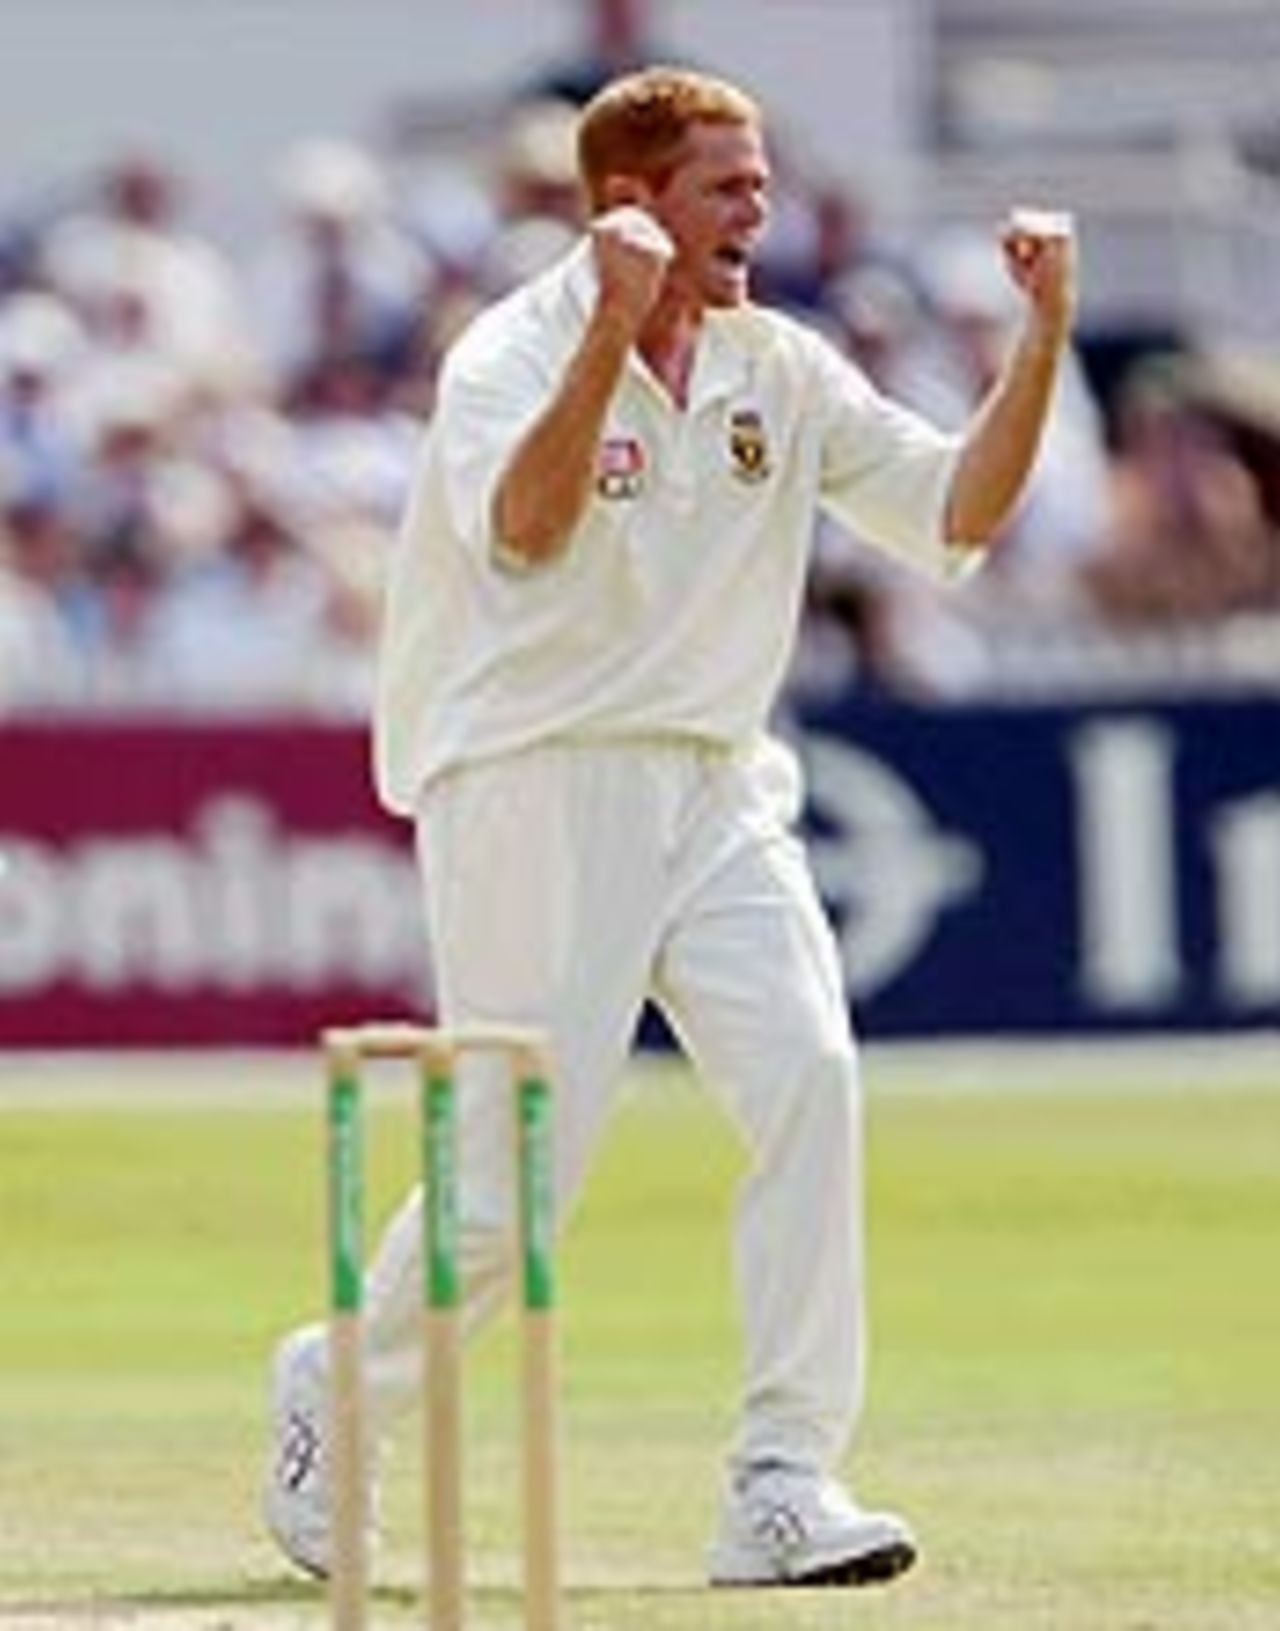 Shaun Pollock celebrates six wickets